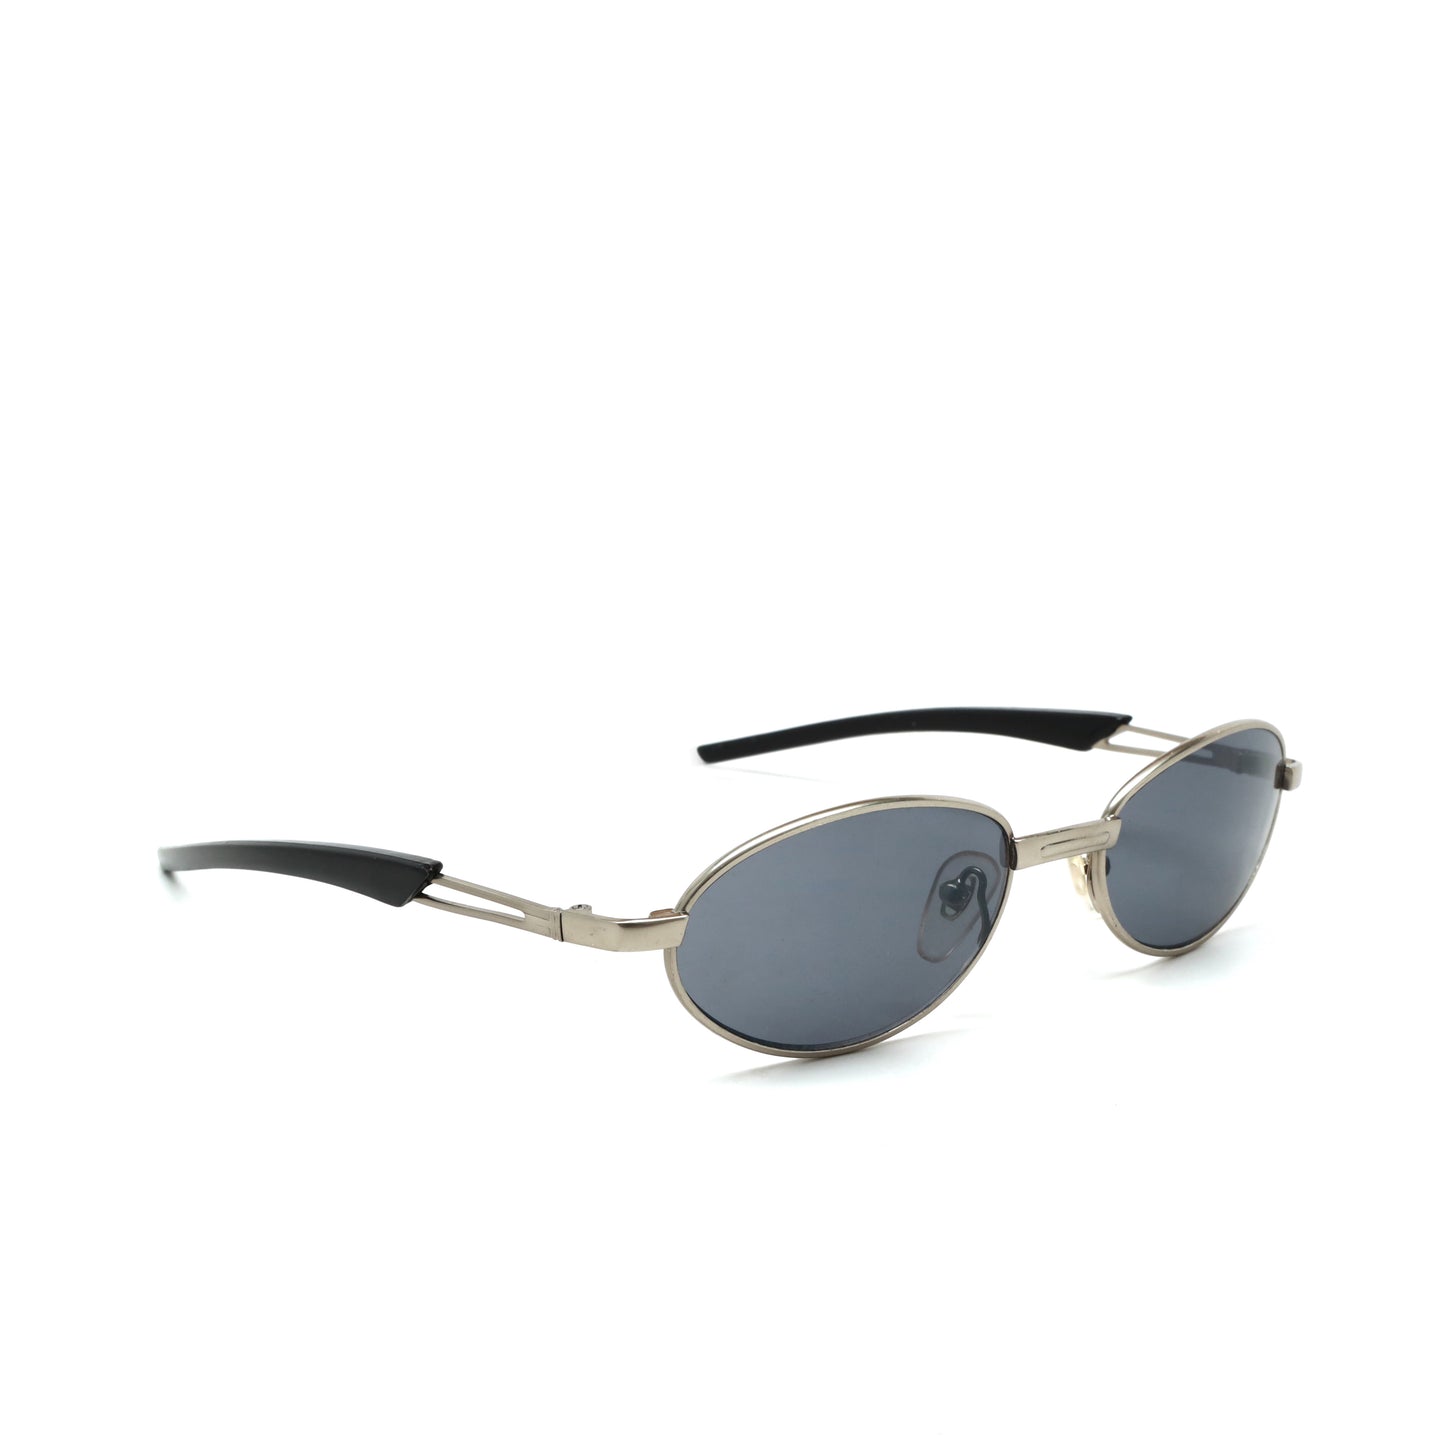 Vintage Small Size 1990s Wraparound Matrix Style Neo Shape Sunglasses - Silver